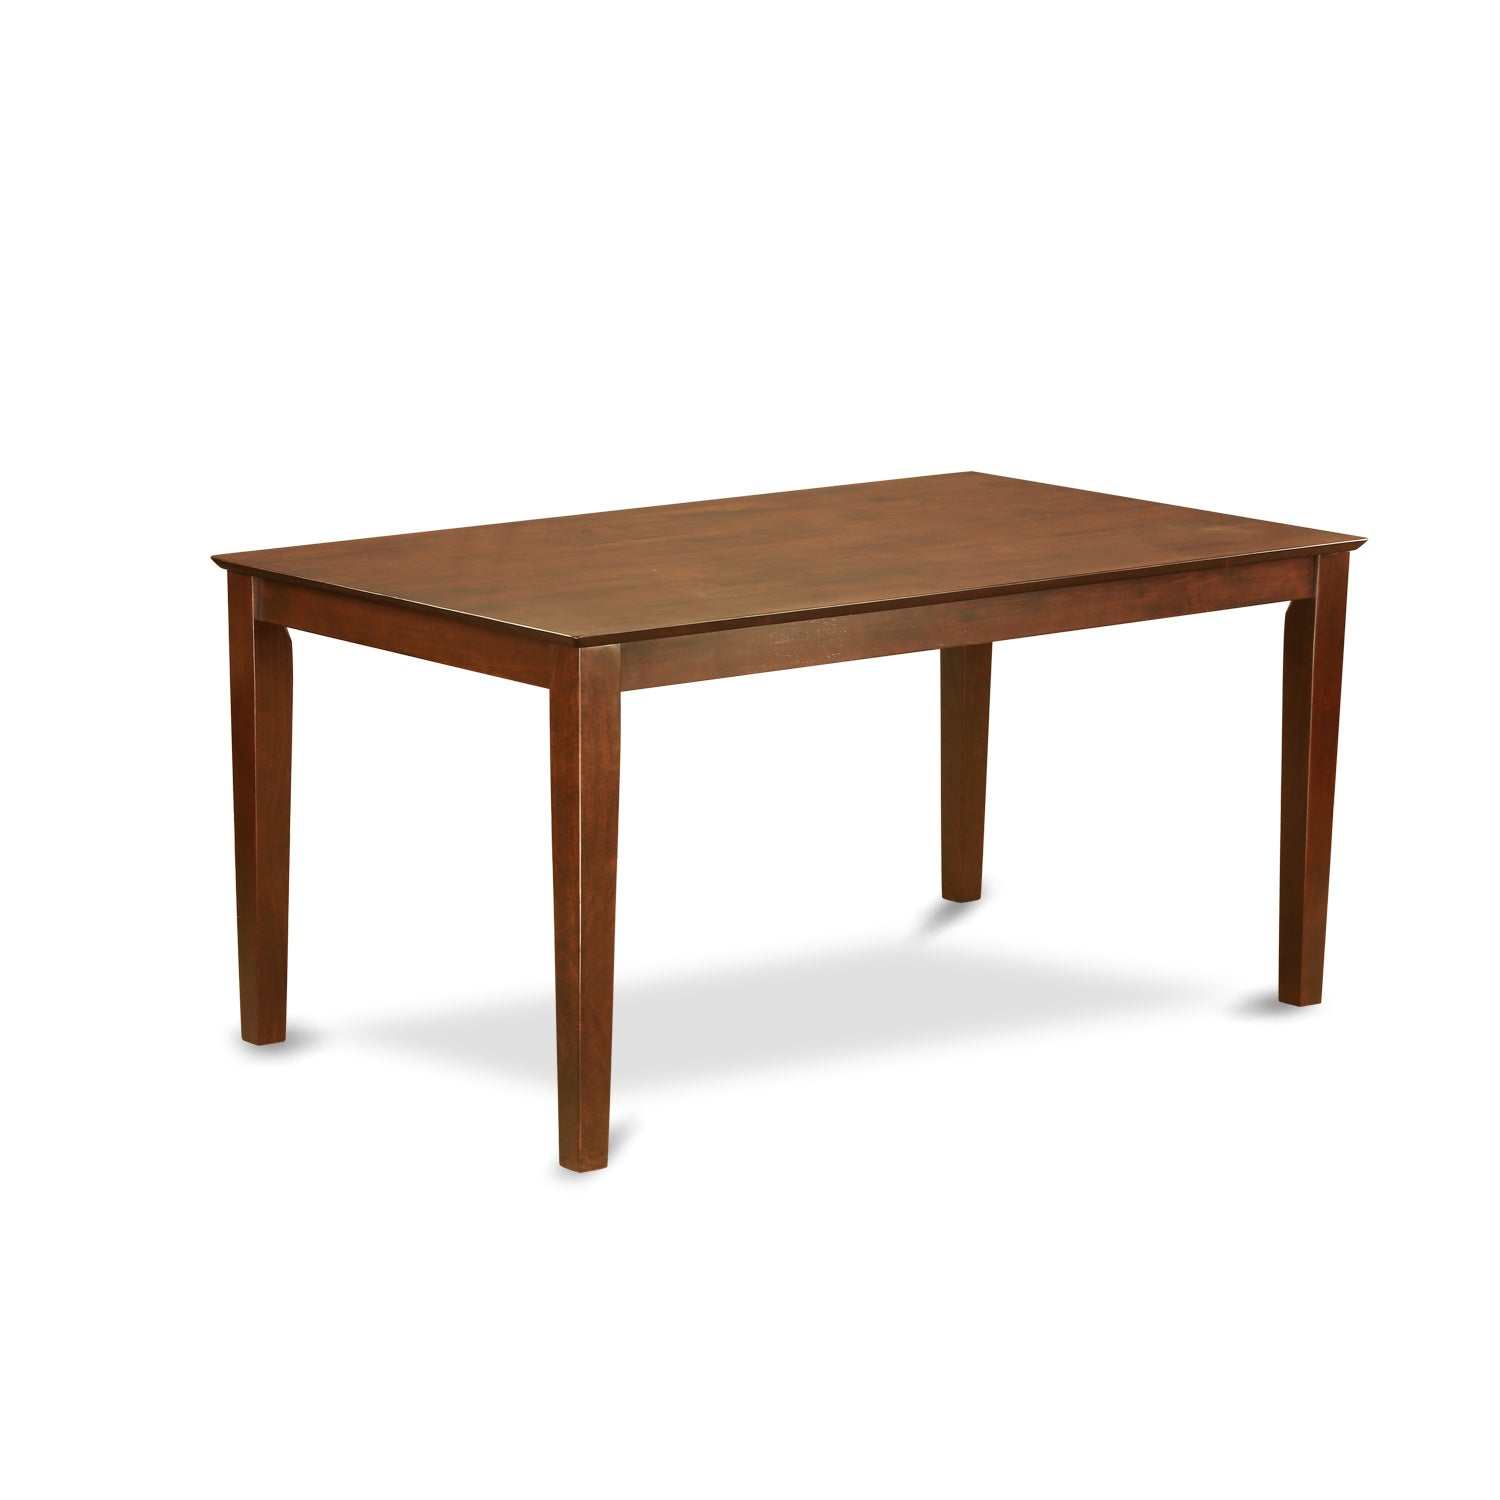 CAT-MAH-S Capri Rectangular dining table 36"x60" with solid wood top - Mahogany Finish